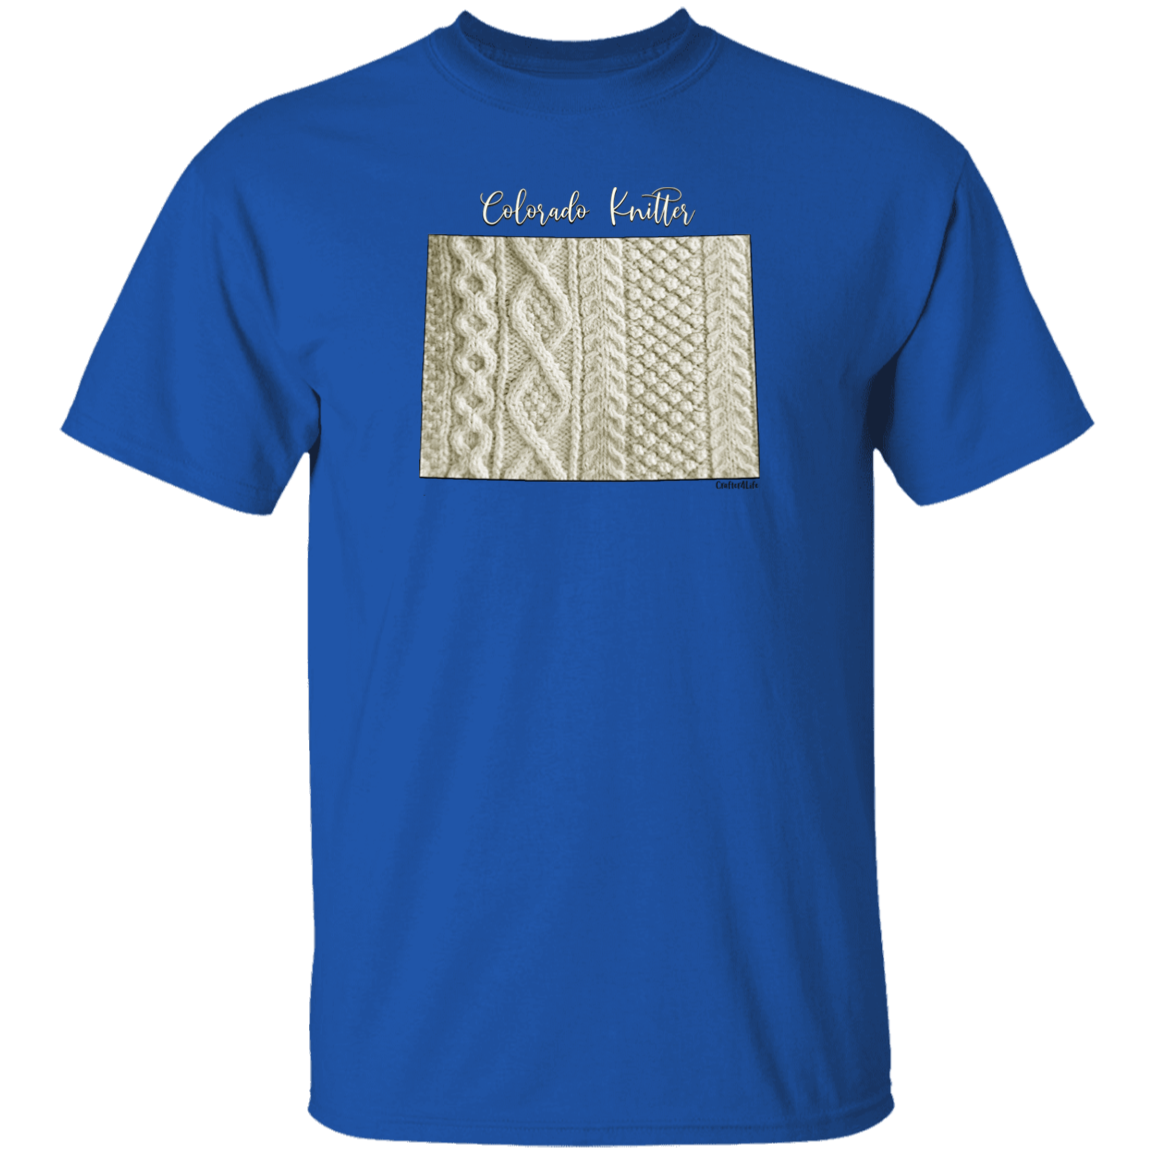 Colorado Knitter Cotton T-Shirt